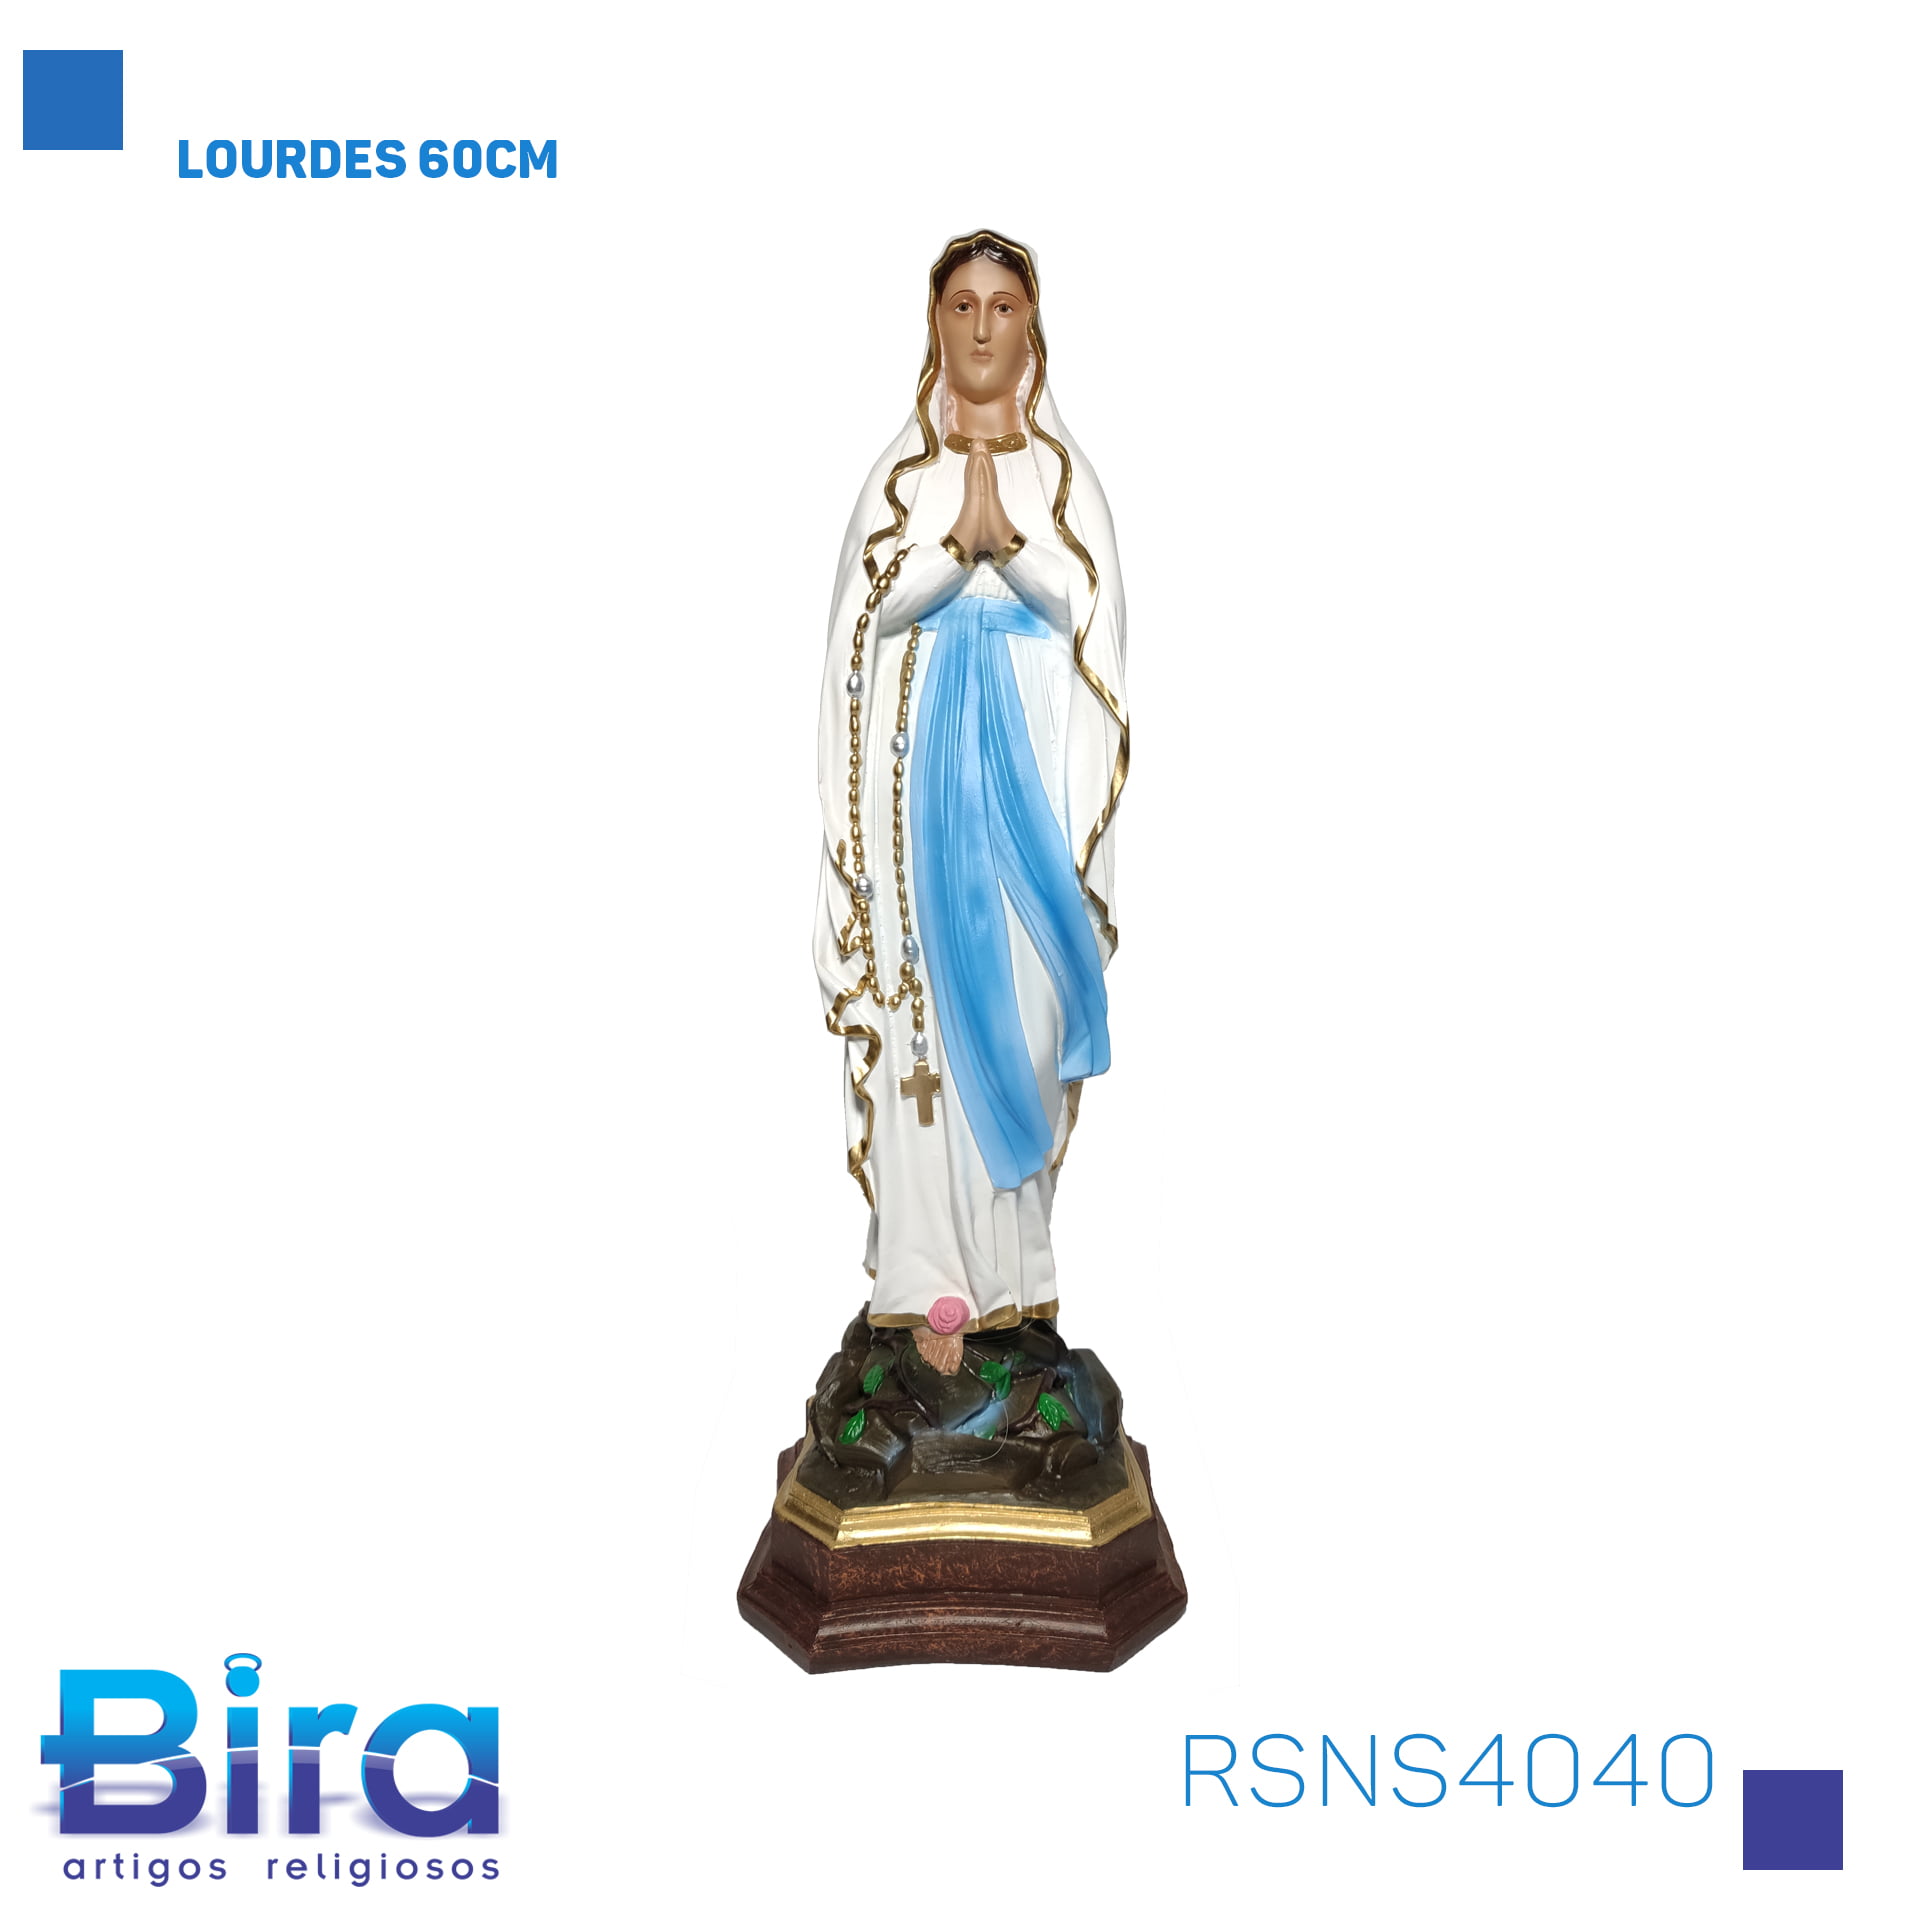 Bira Artigos Religiosos - LOURDES 60CM Cód. RSNS4040